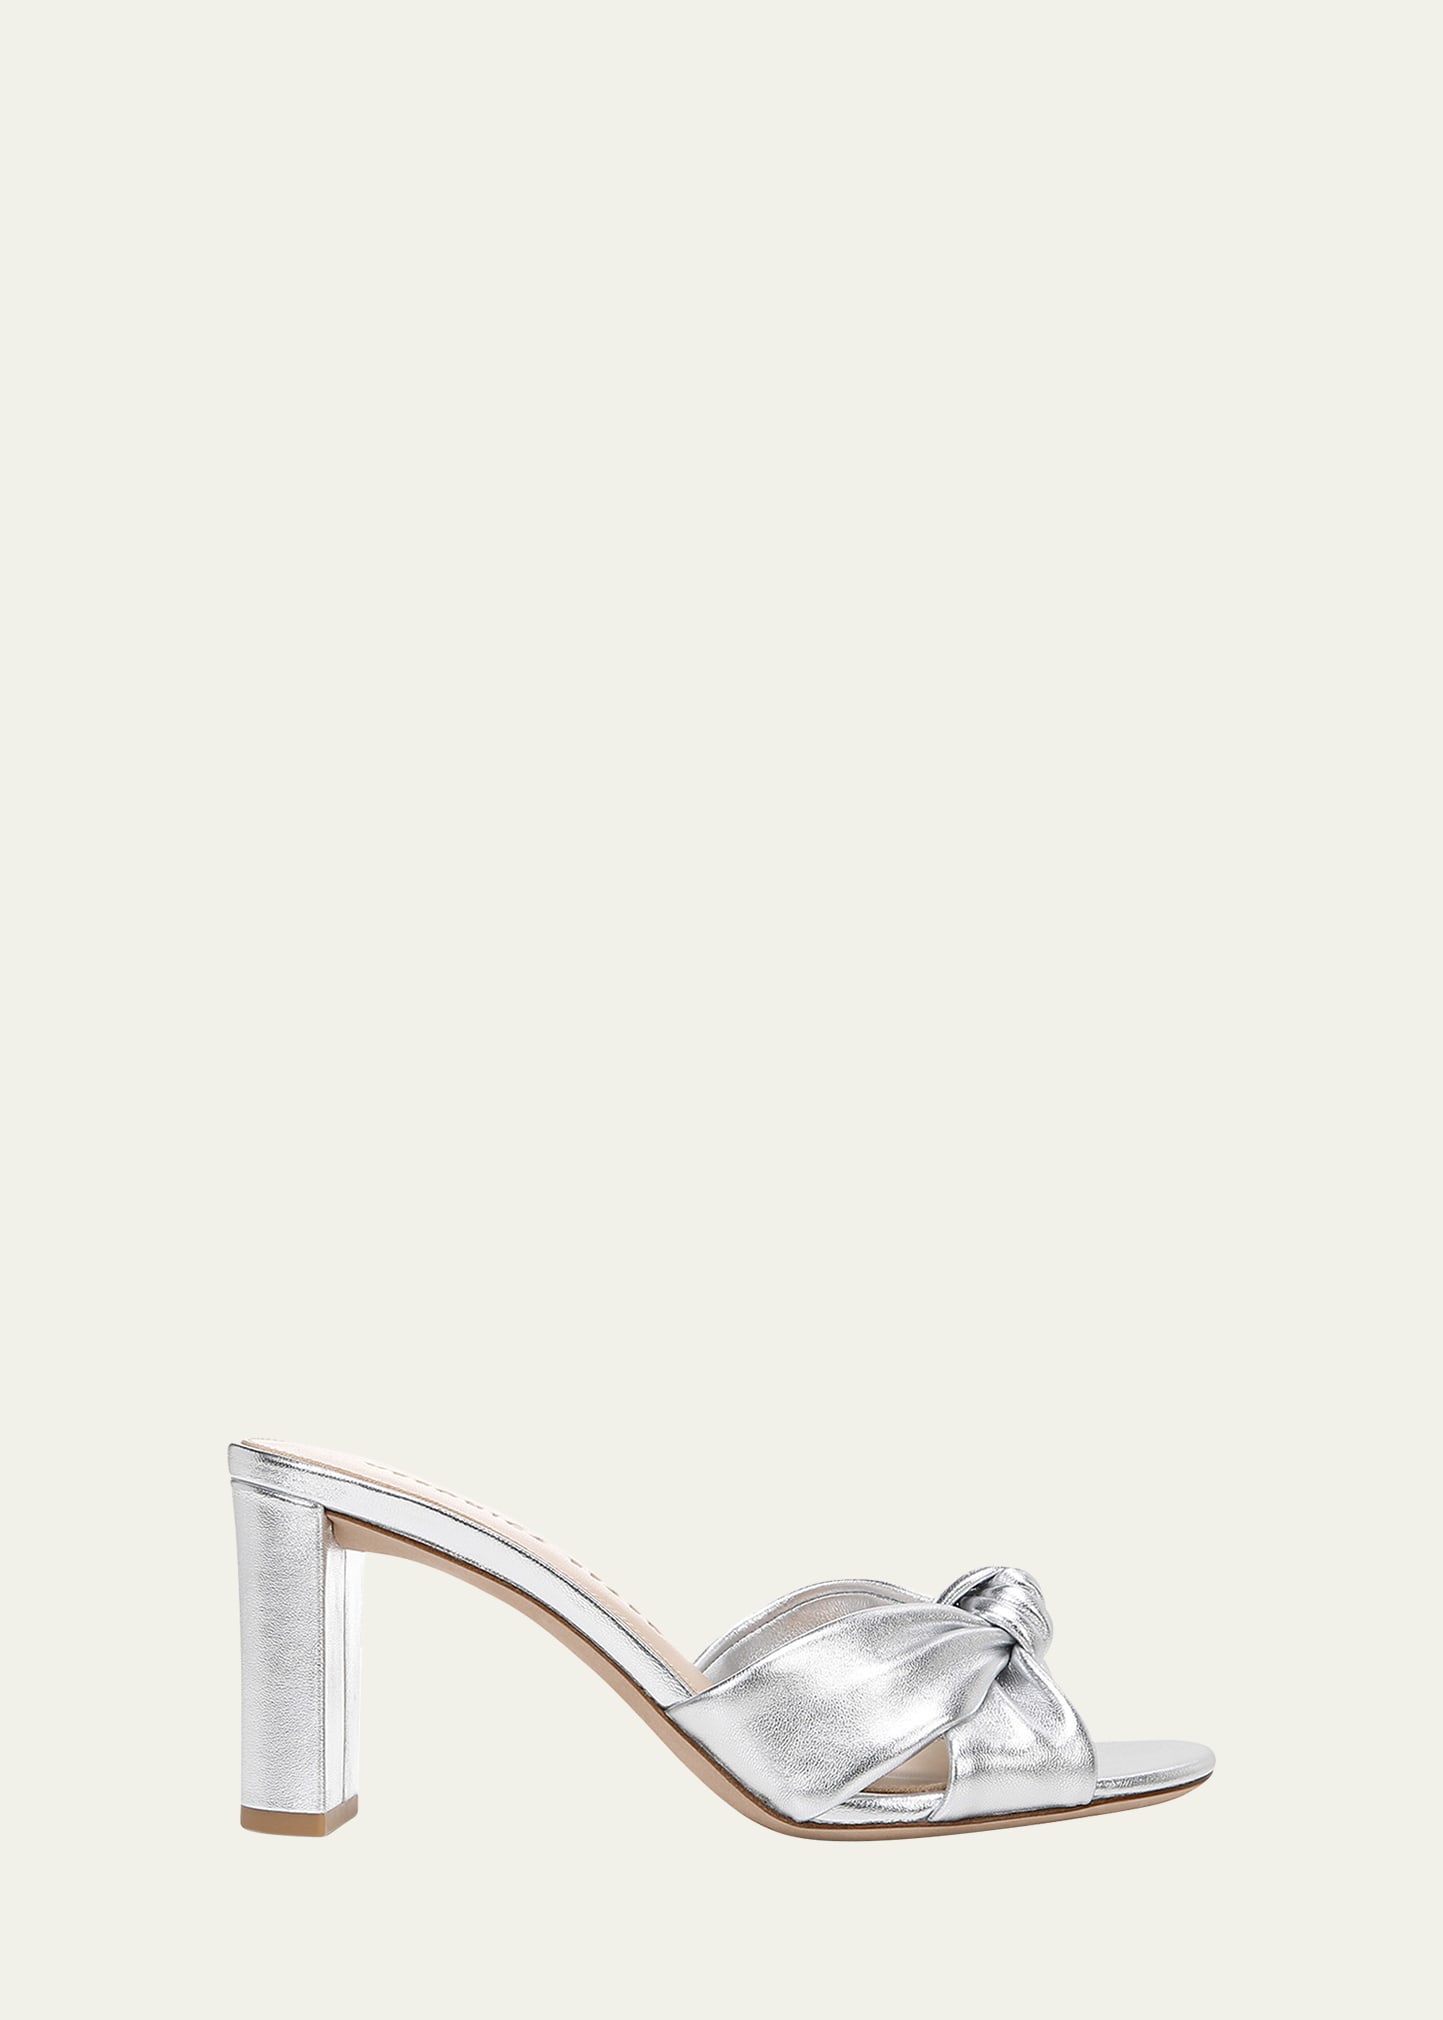 Veronica Beard Ganita Metallic Knot Slide Sandals In Platinum Gold Lea